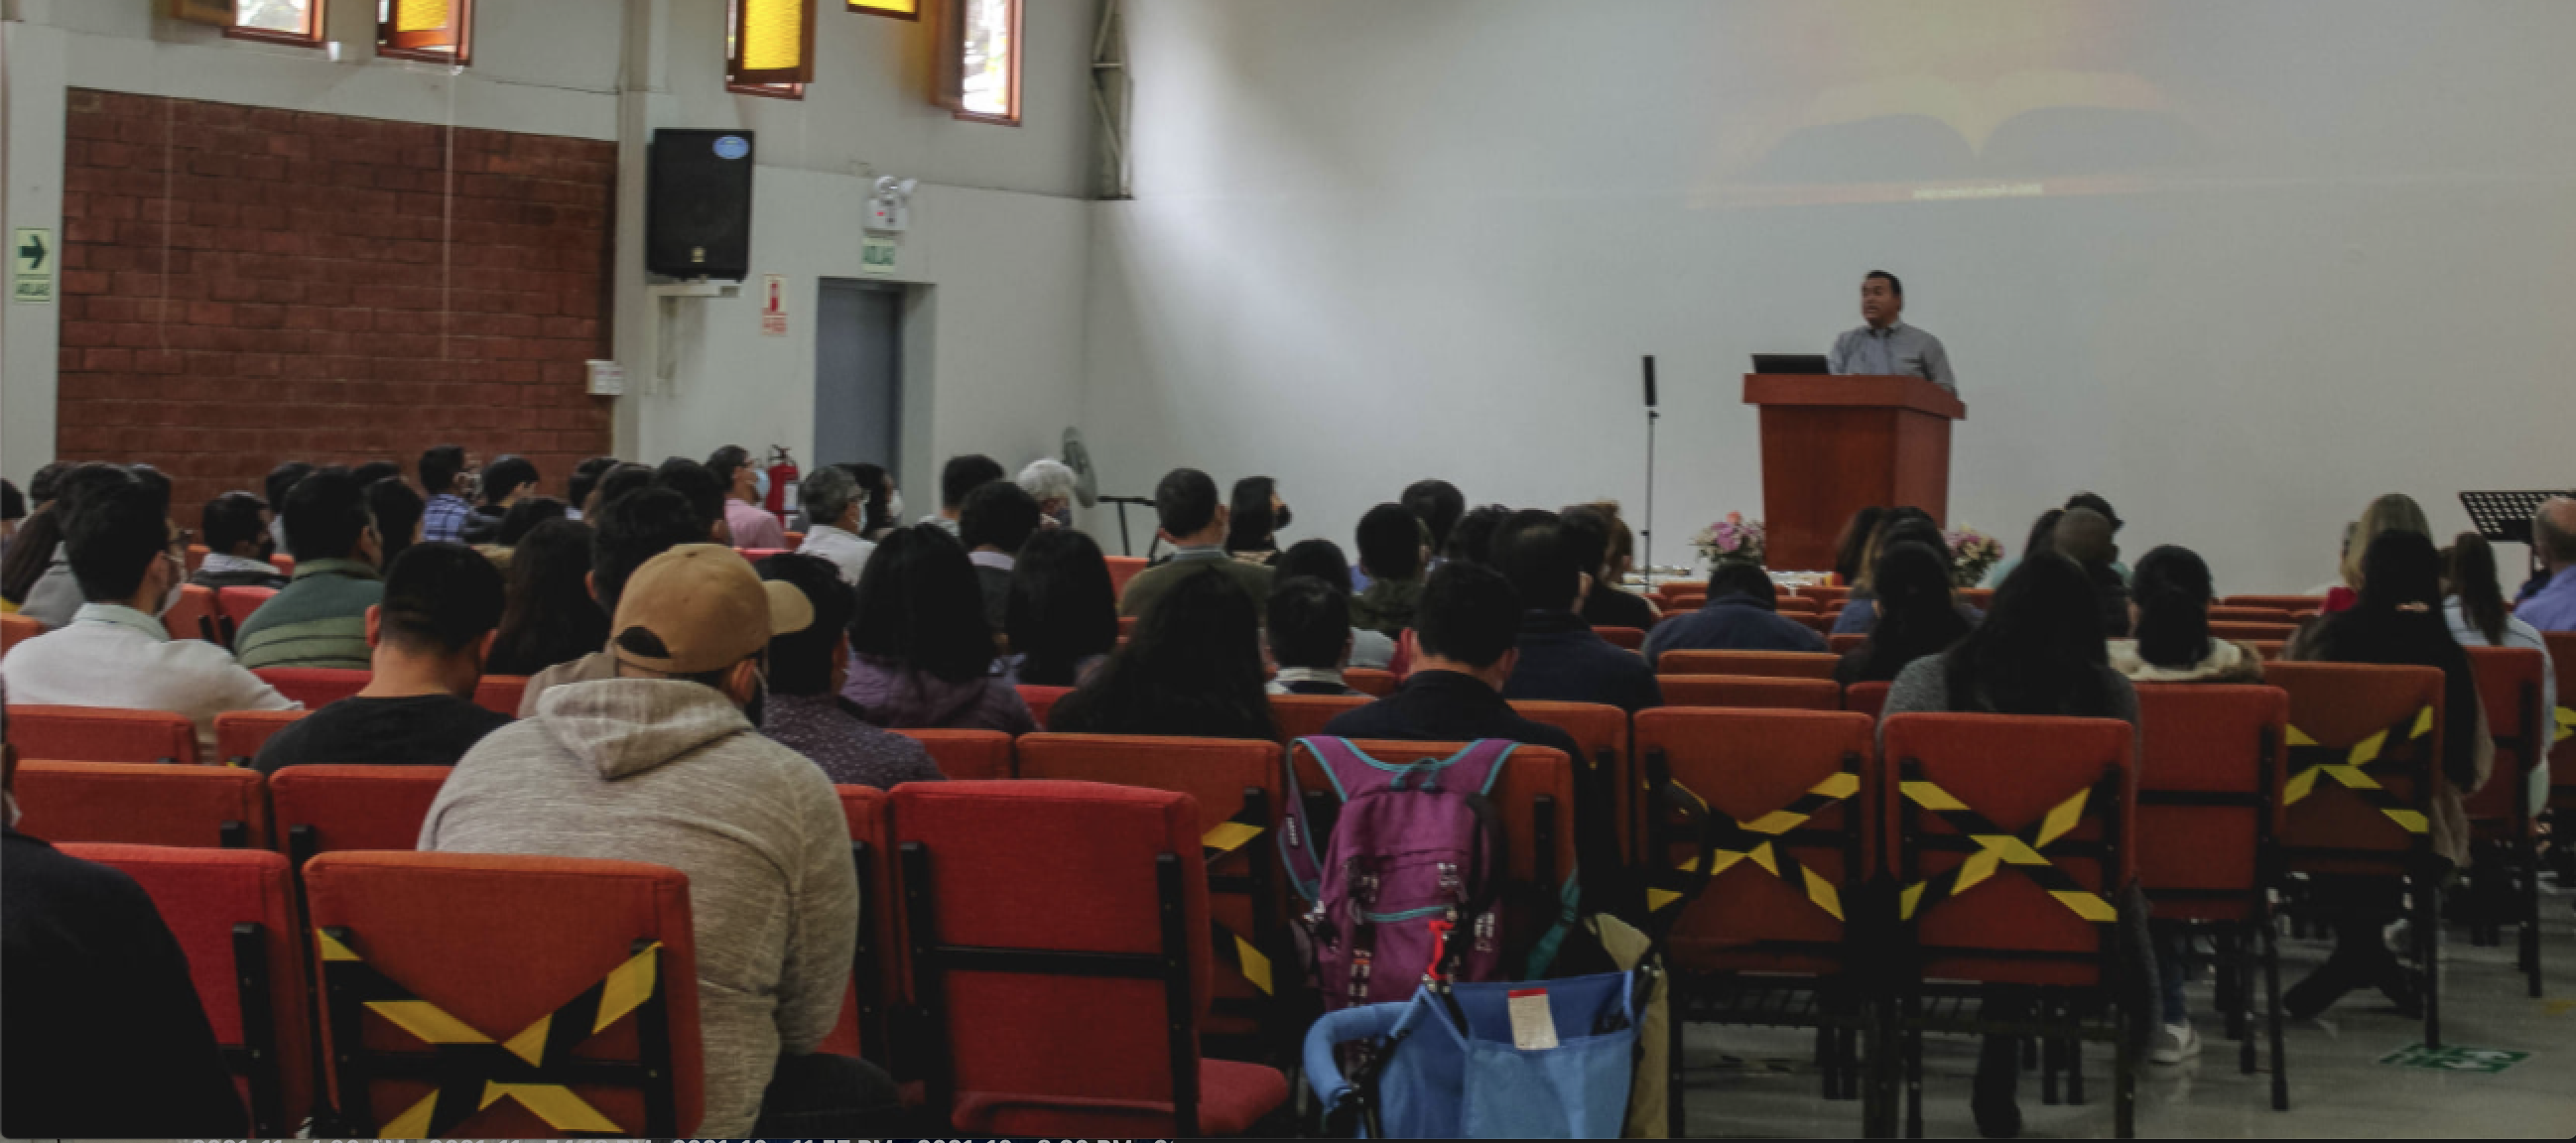 Jose Preaching At Ibge Church In Lima